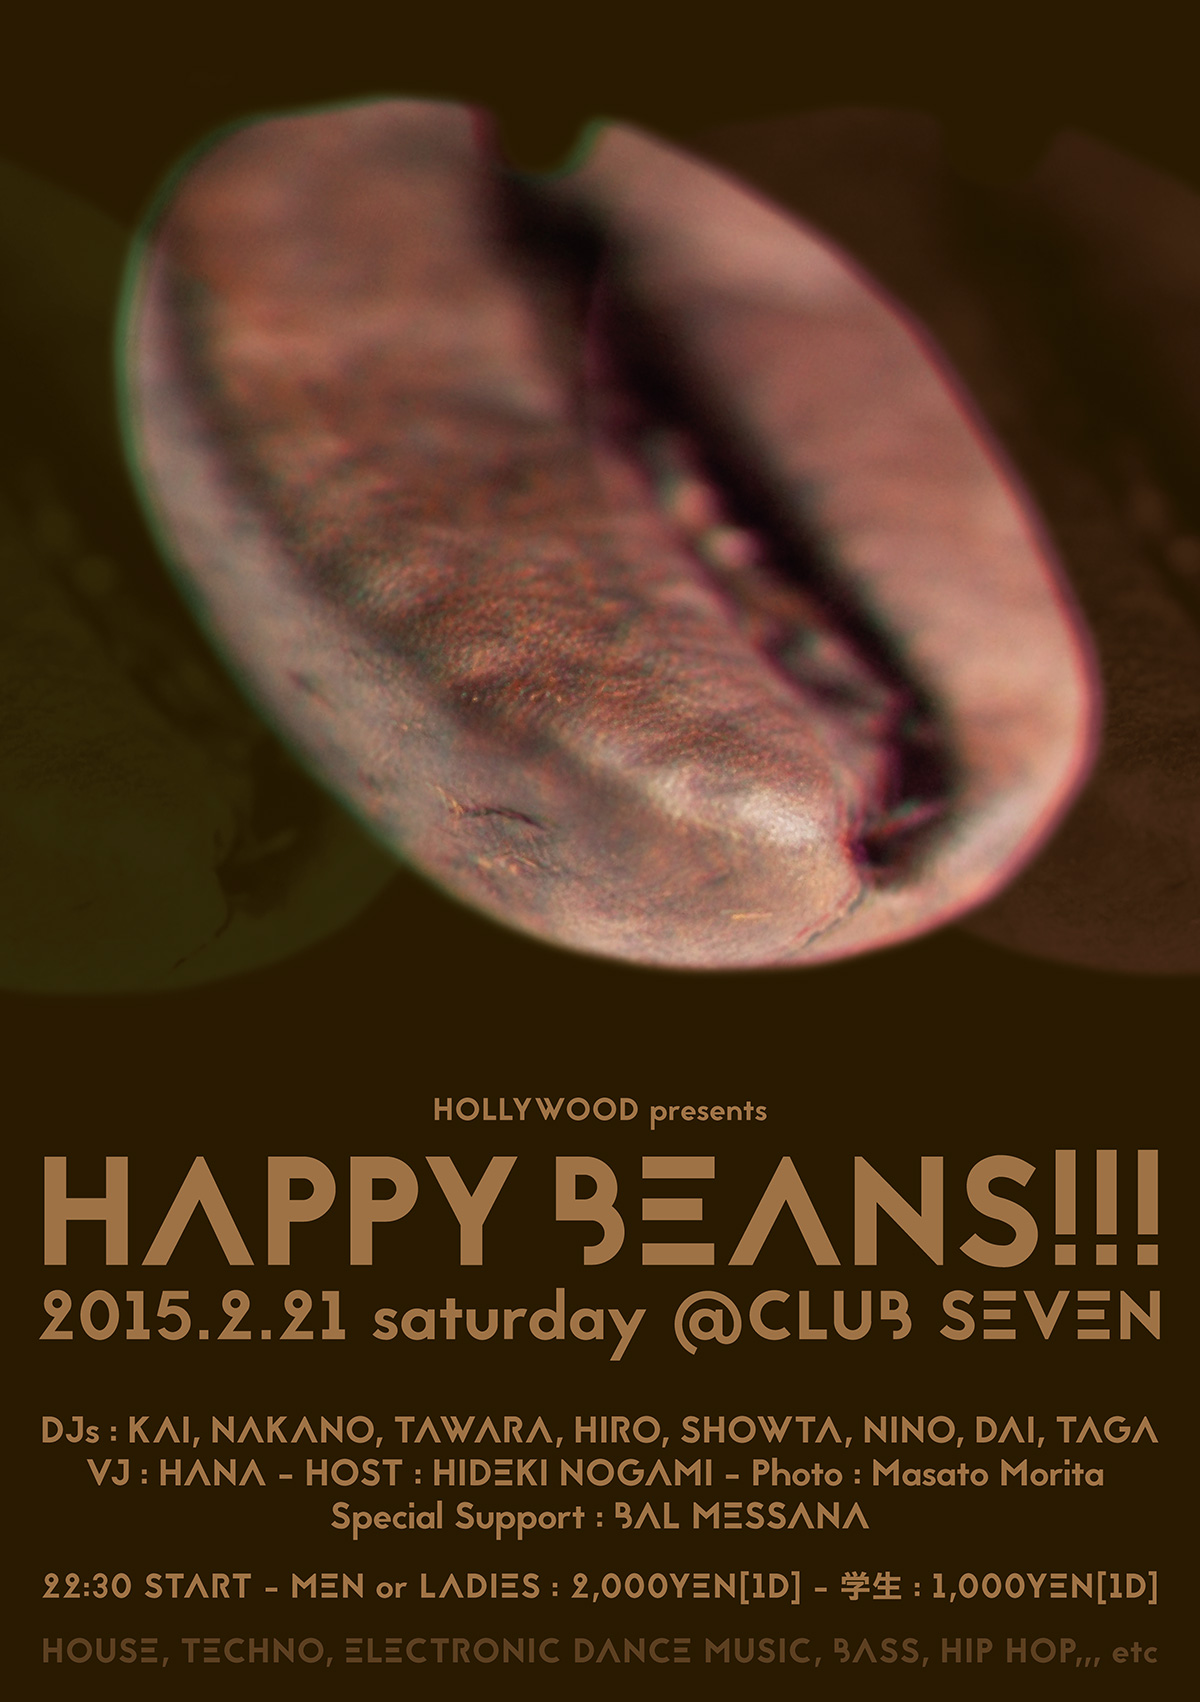 HOLLYWOOD presents HAPPY BEANS!!! 2015.04.18(sat)